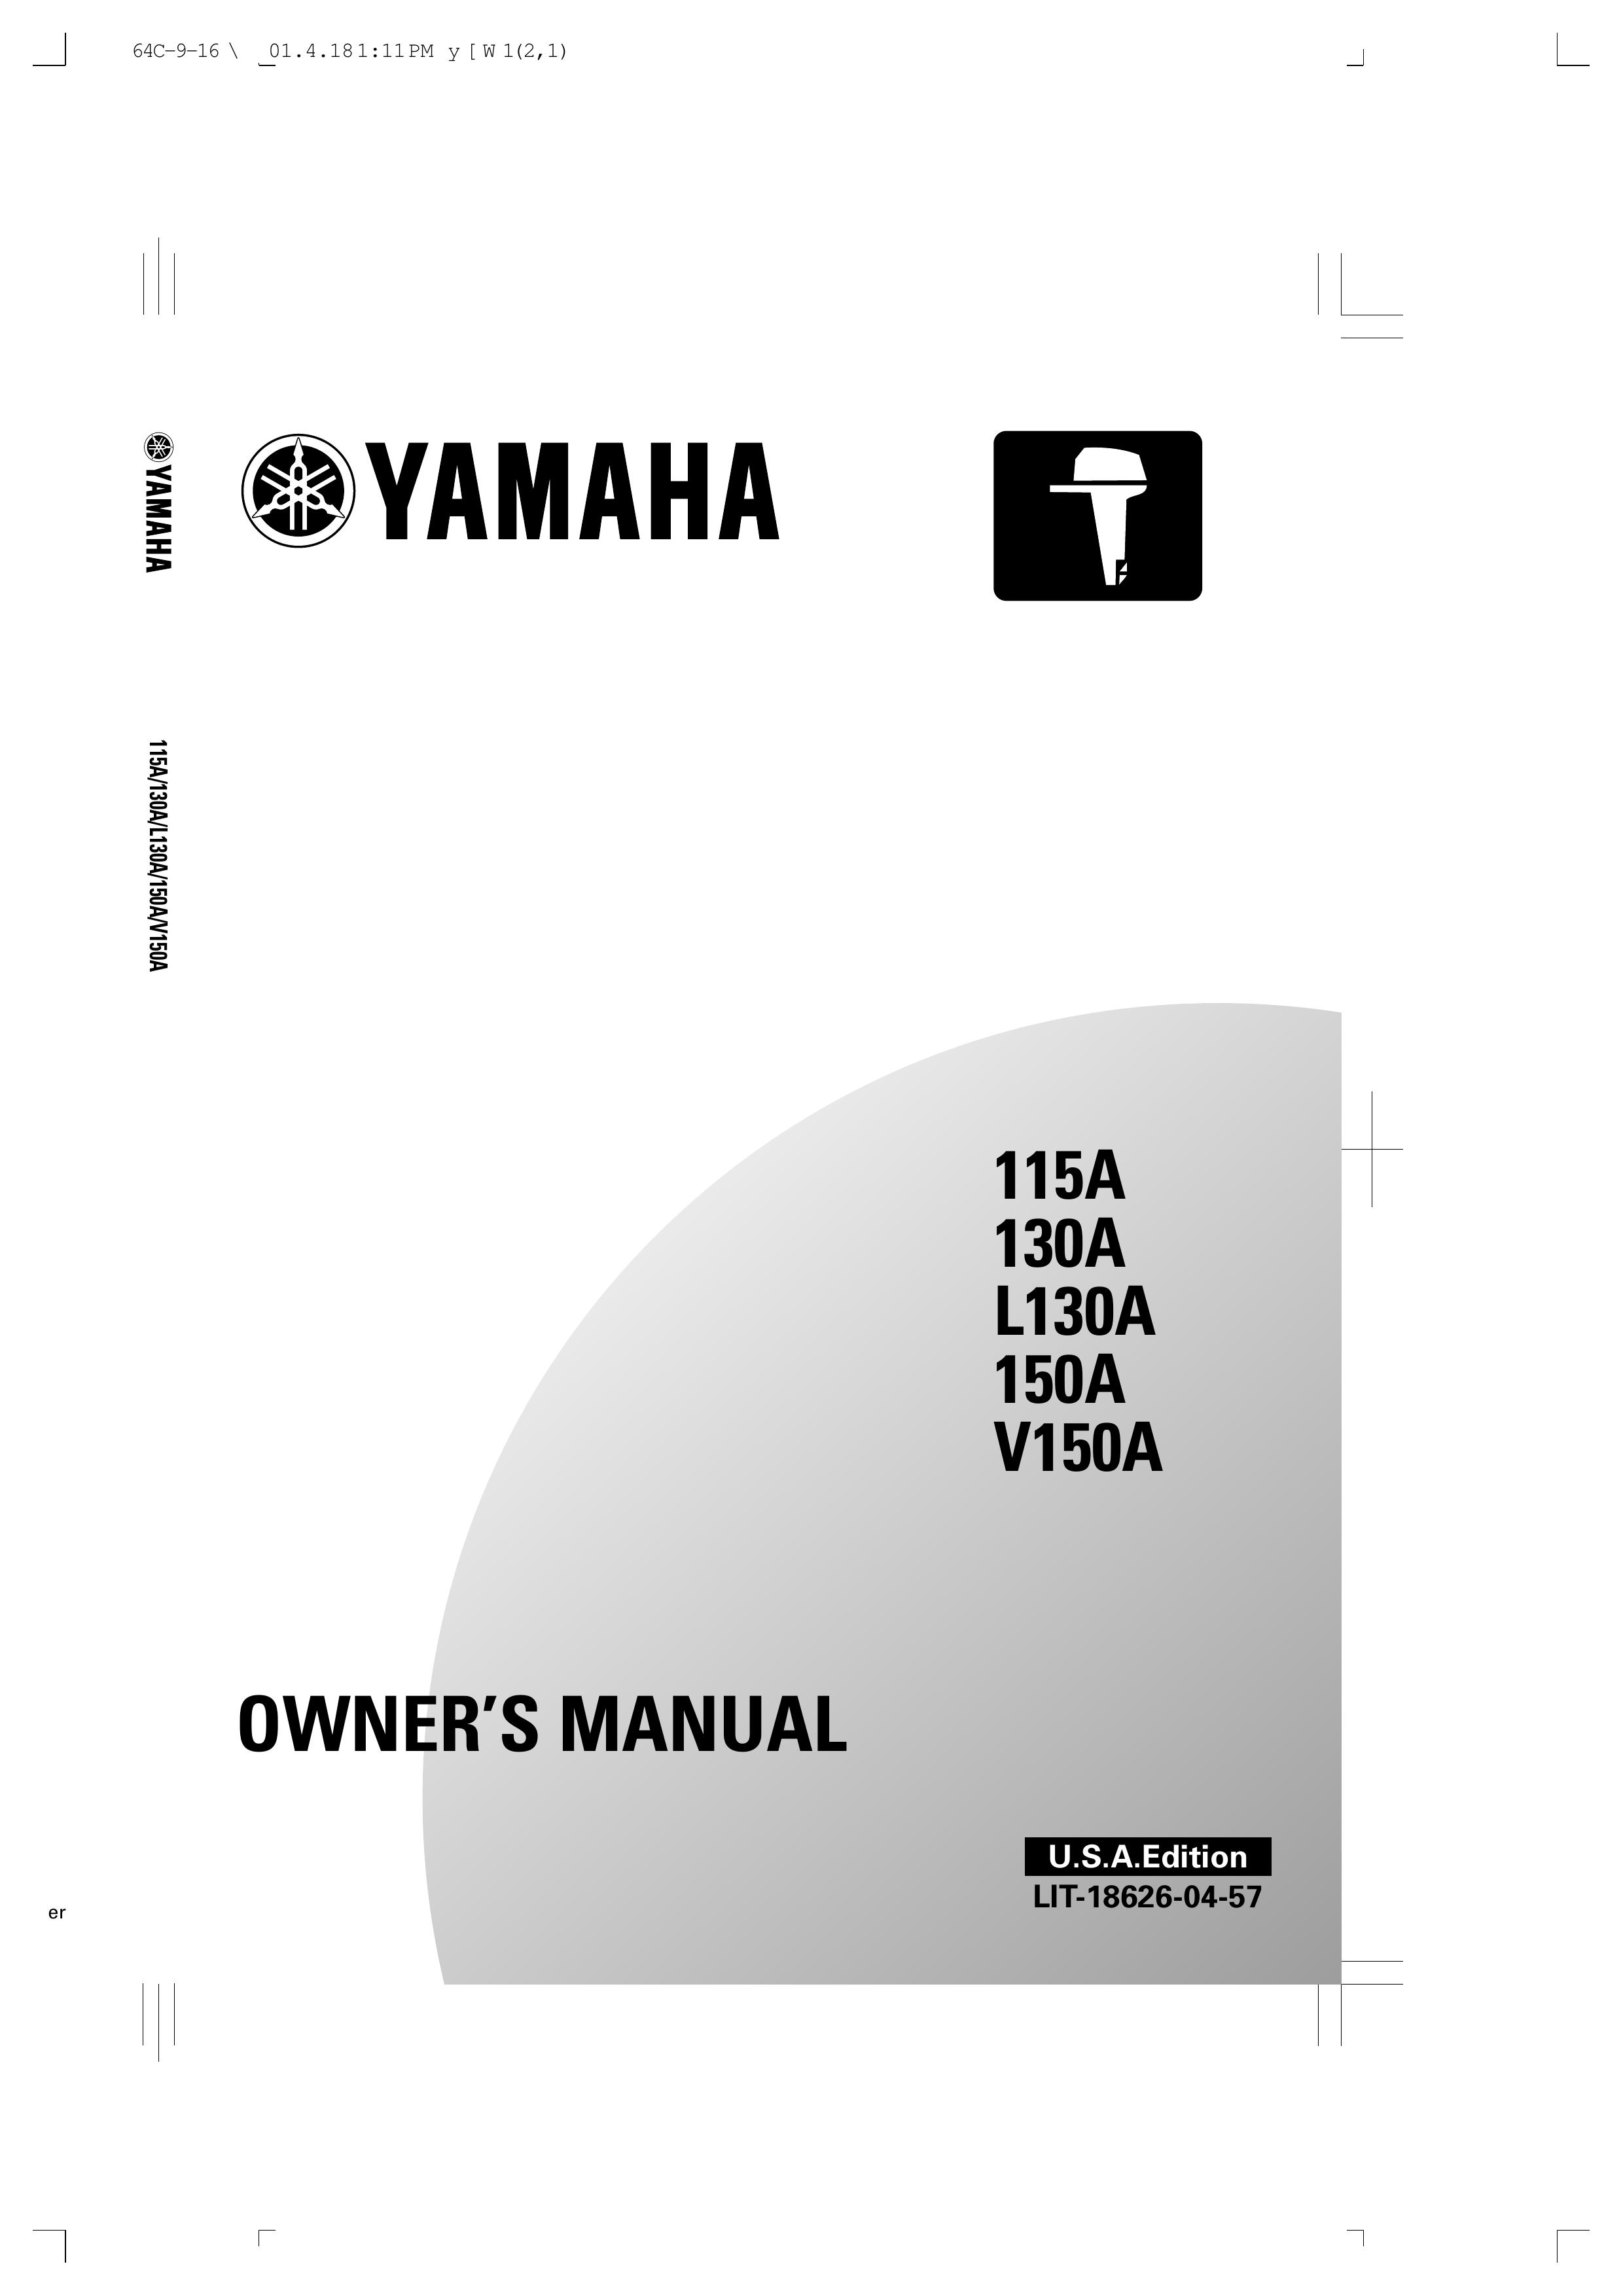 Yamaha 150A Outboard Motor User Manual